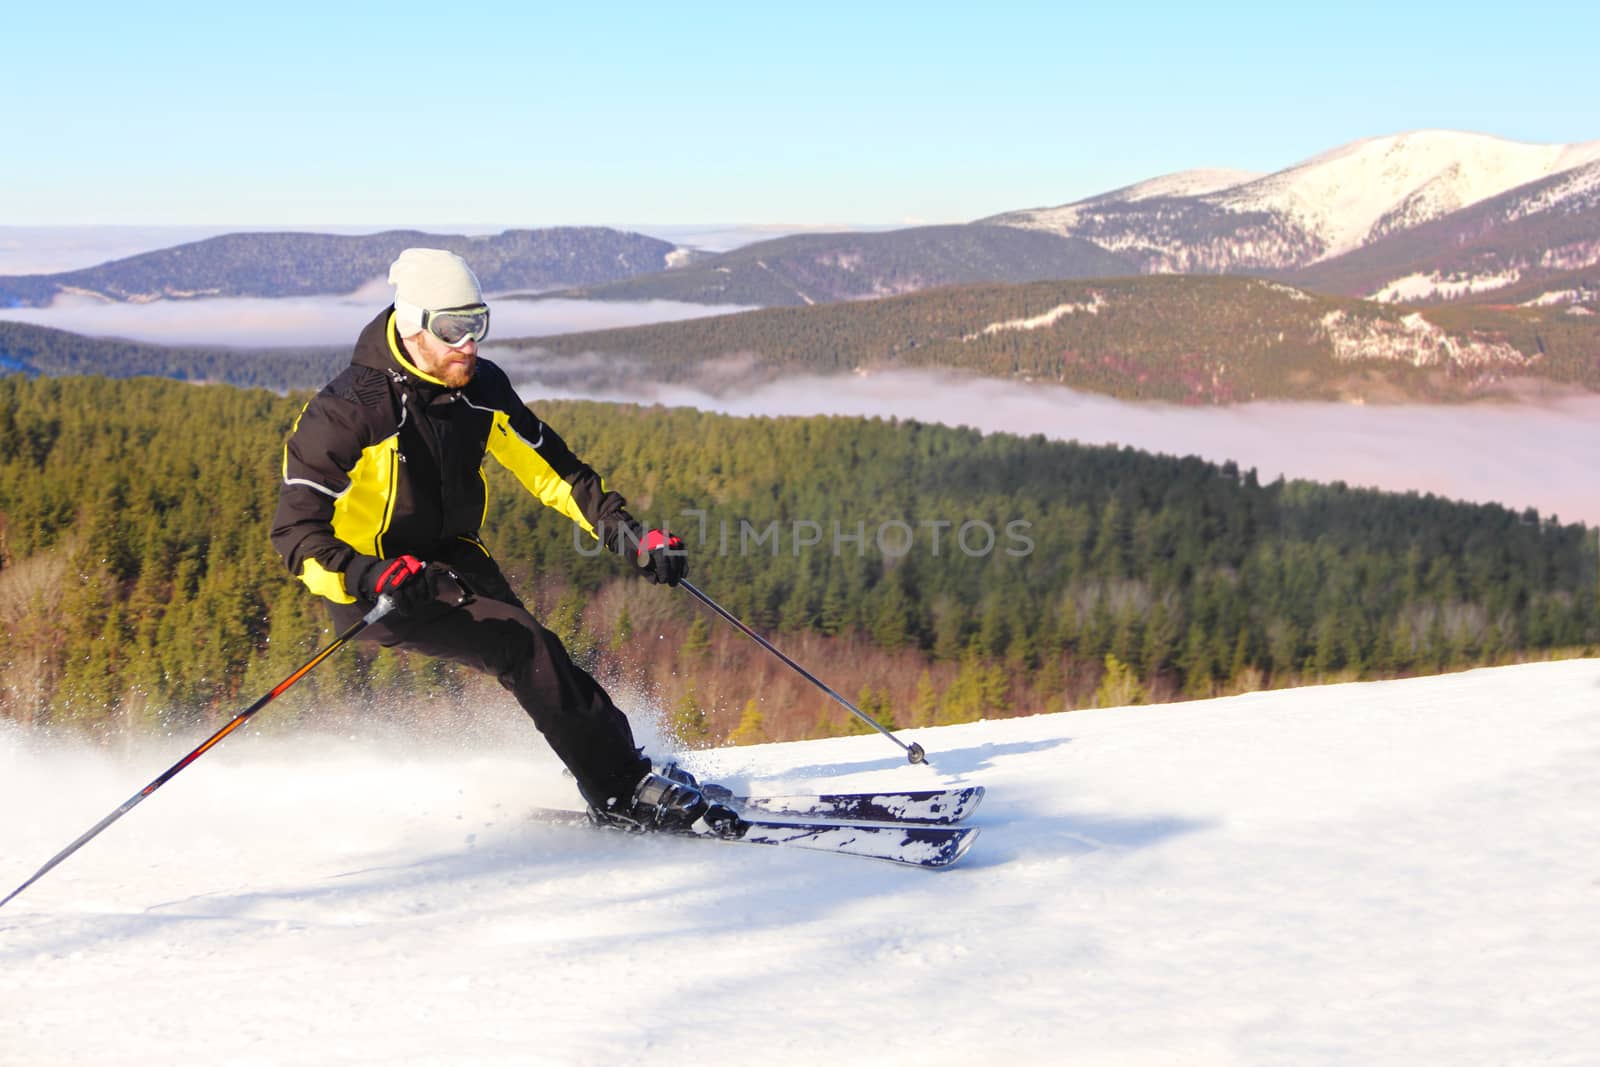 Skier skiing downhill in morning mountains, resort Spindleruv Mlyn, Krkonose, Czech Republic